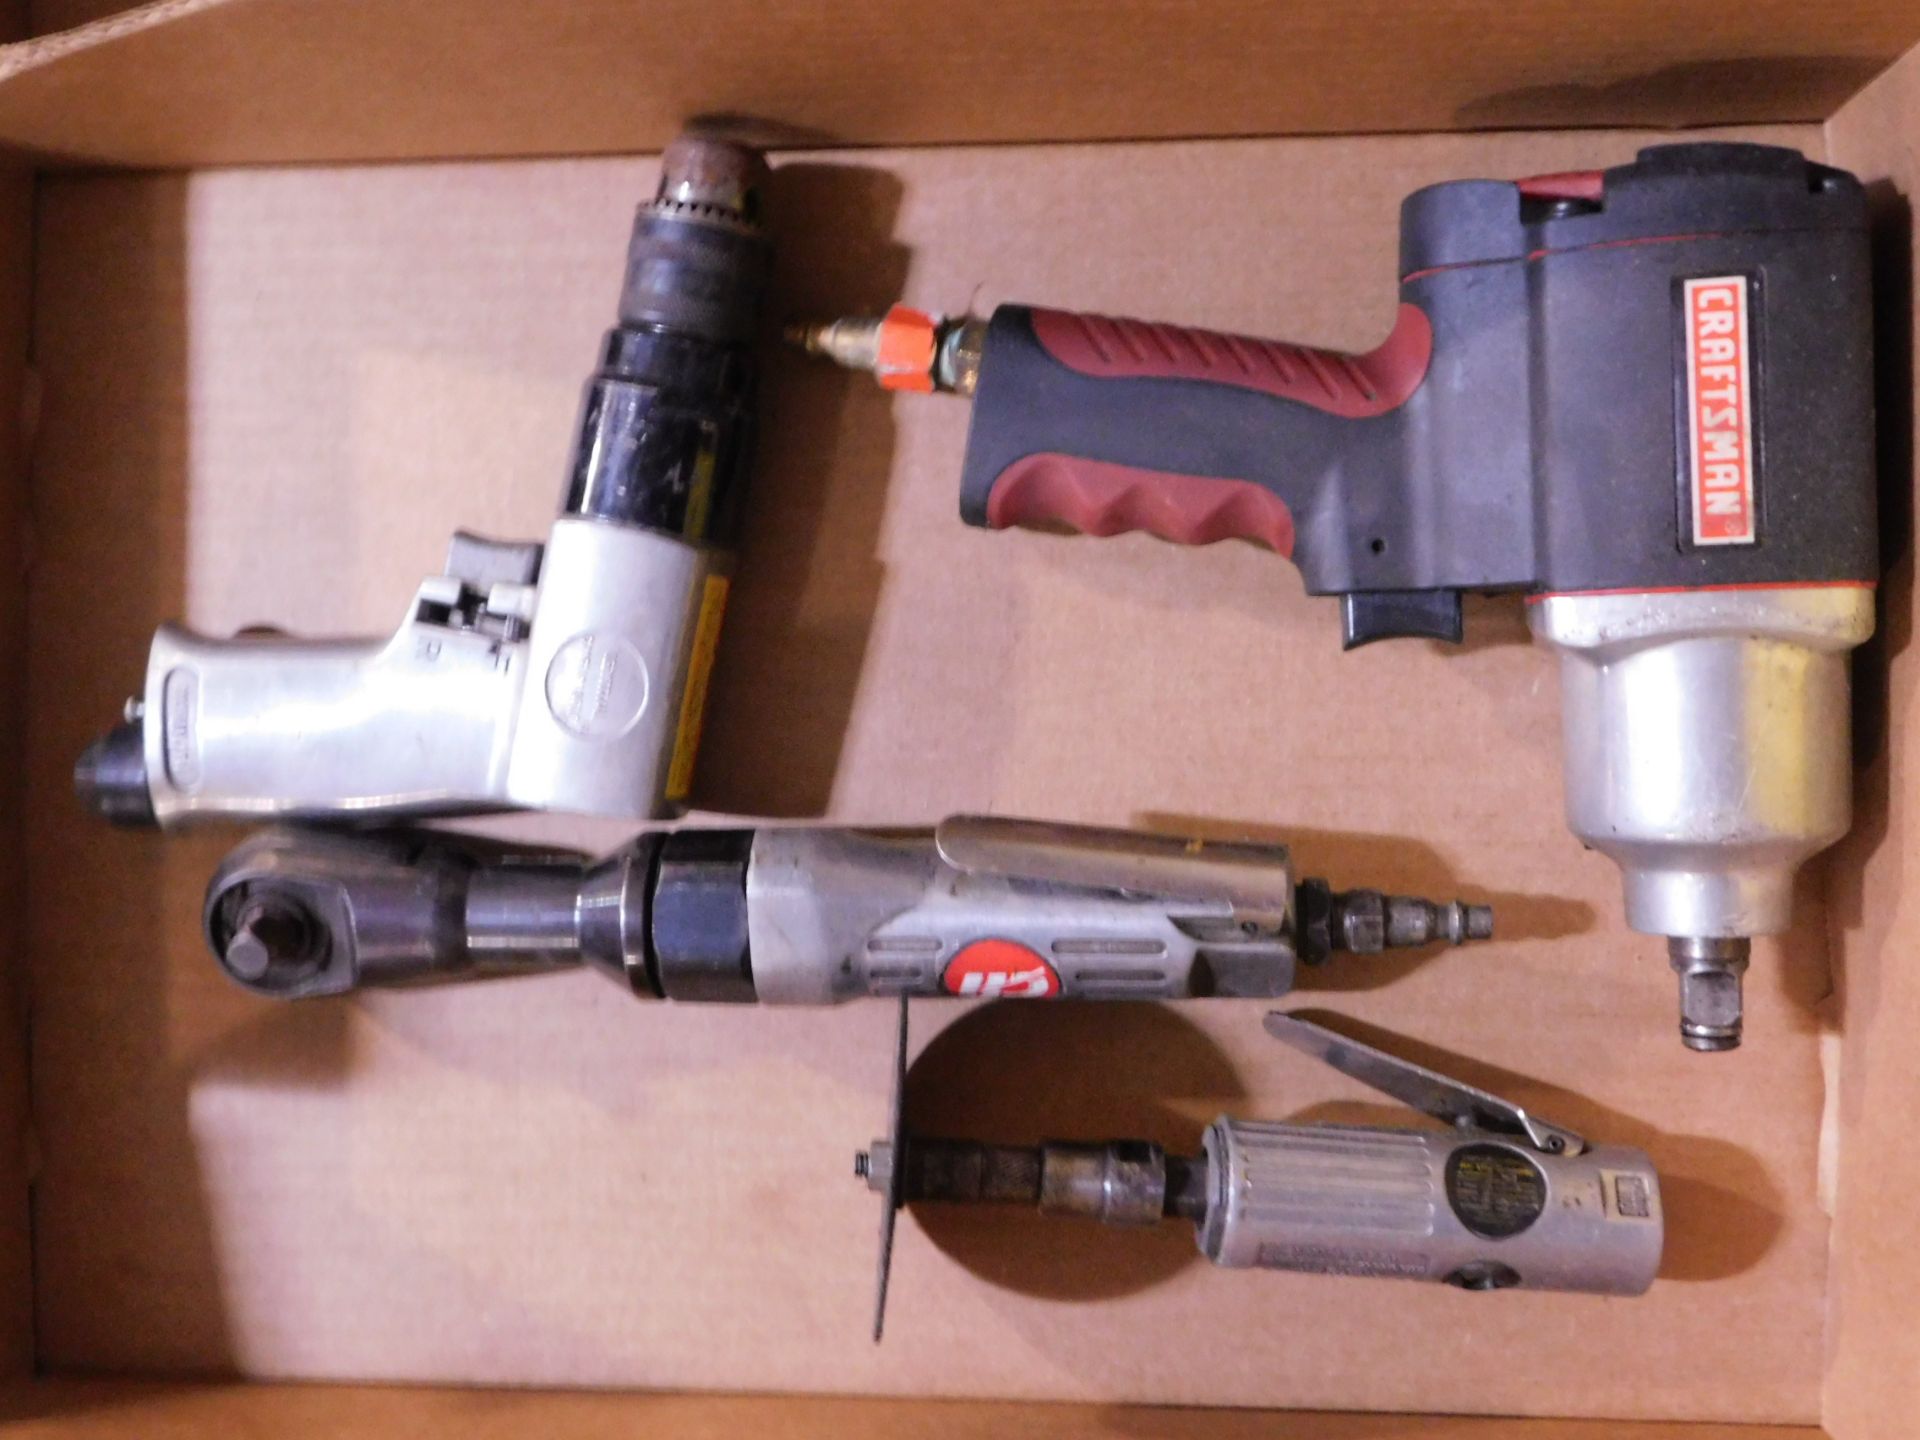 Craftsman Pneumatic Impact, Pneumatic Drill, Grinder and Ratchet